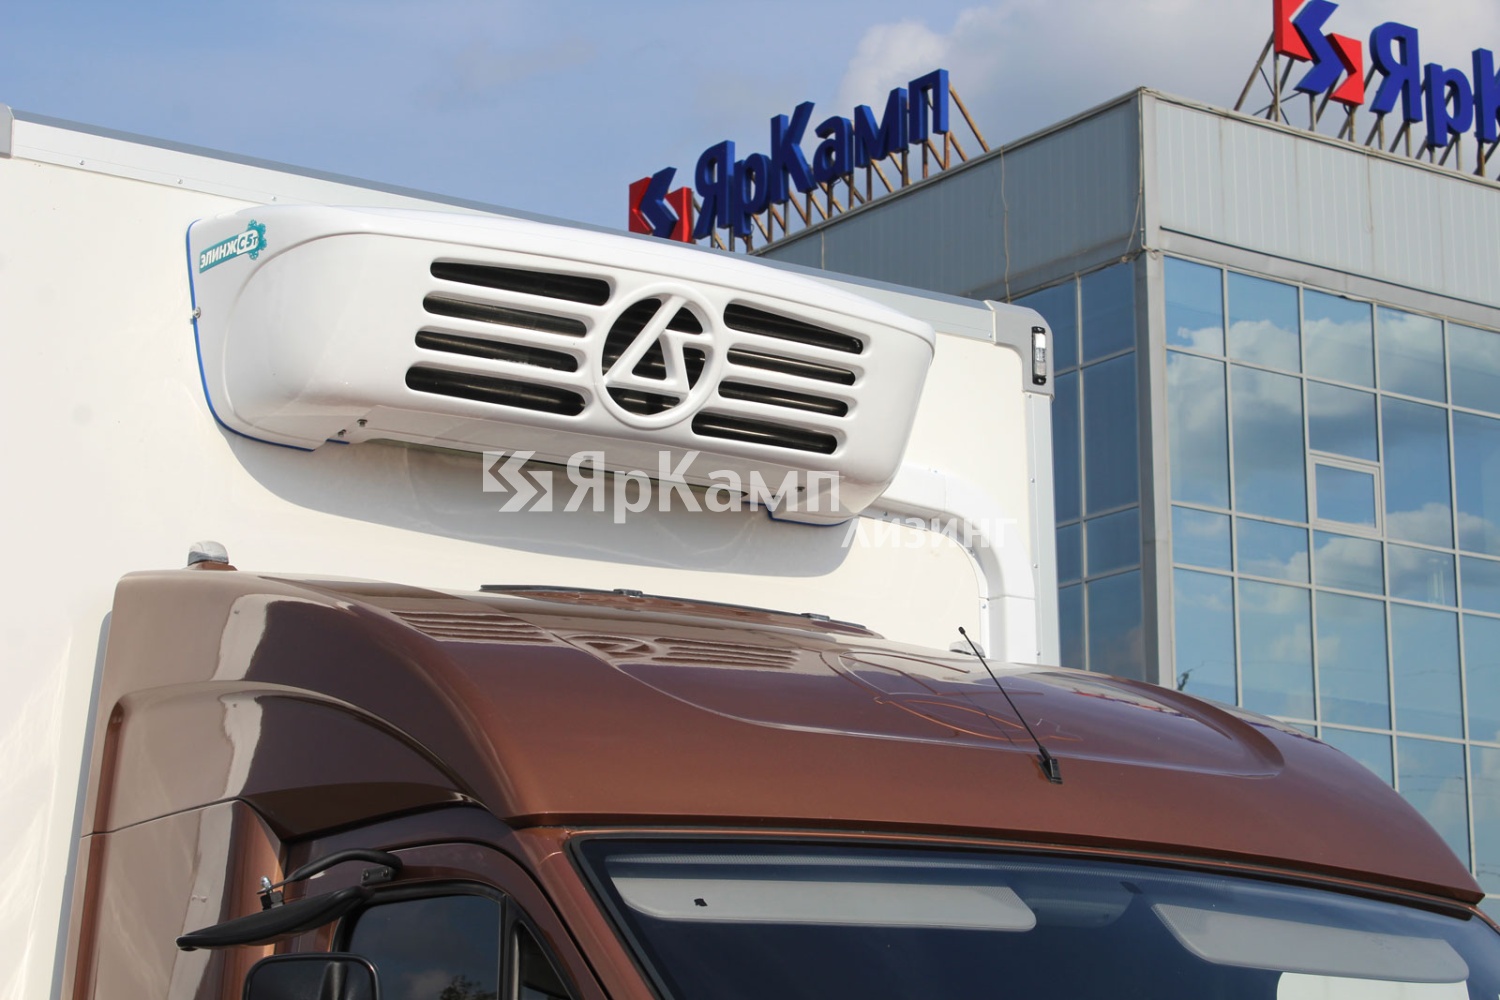 "ЯрКамп-Лизинг" осуществил поставку рефрижератора Чайка-Сервис 278451 на базе ГАЗ-С41RB3